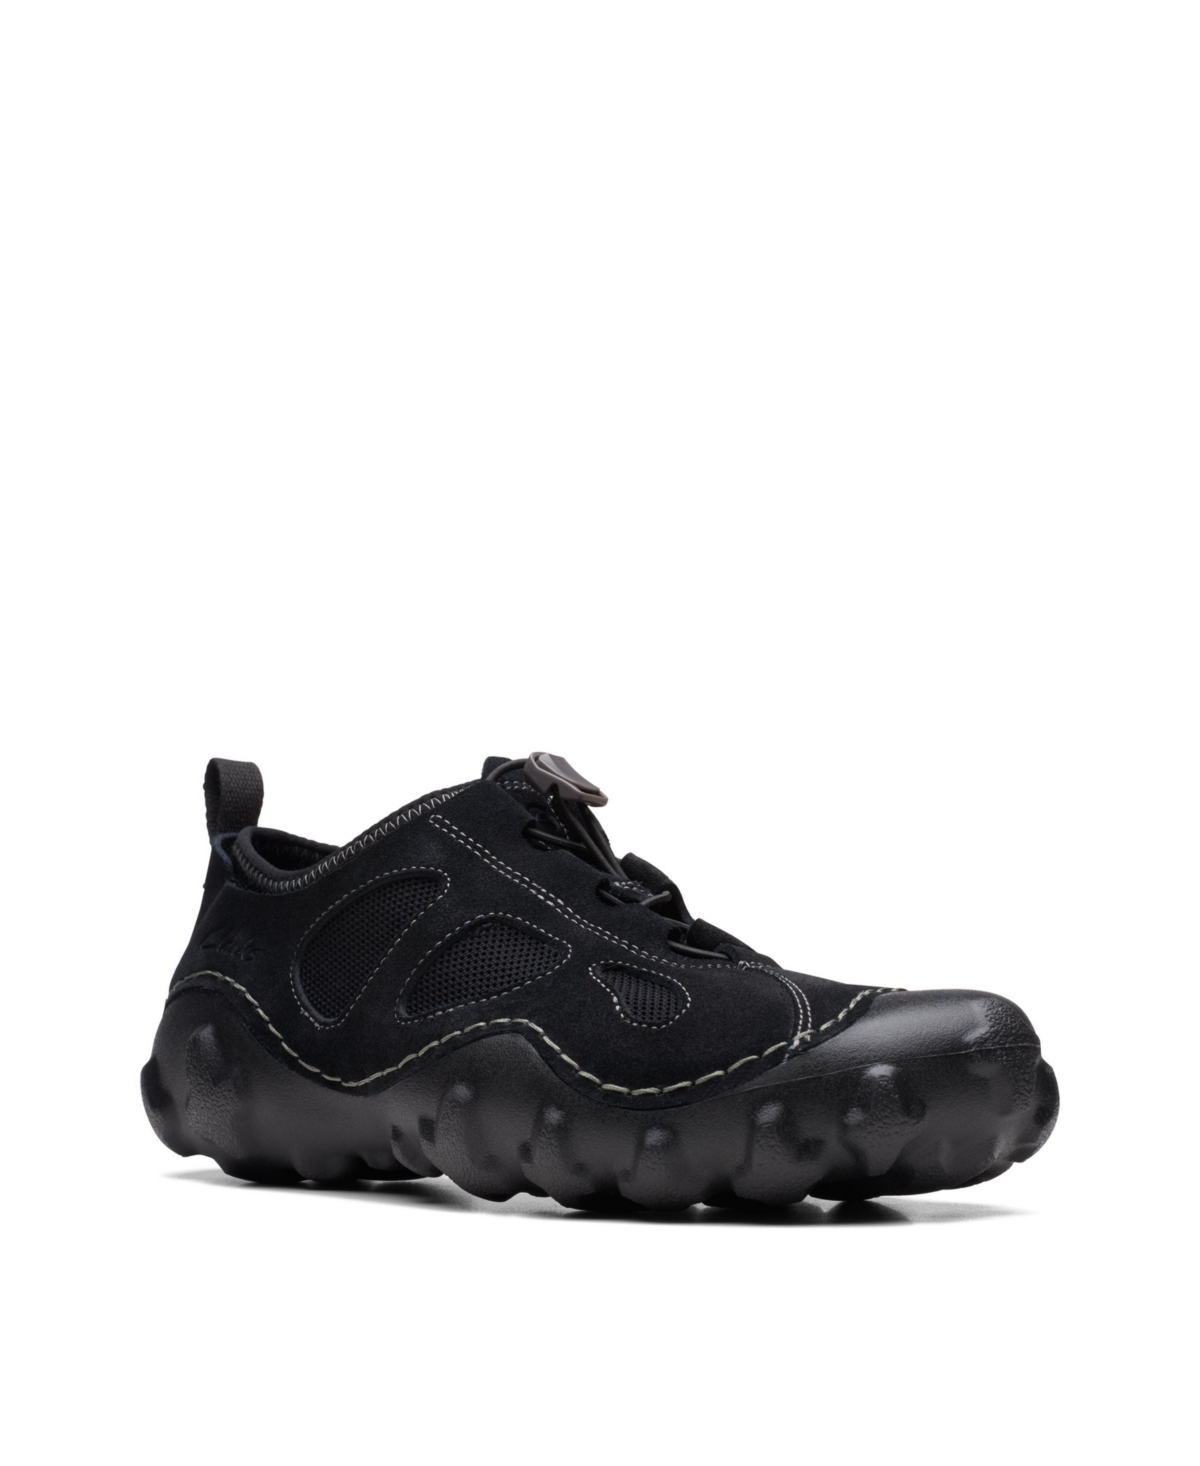 Men's Collection Mokolite Trail Slip-On Shoes - Black Suede